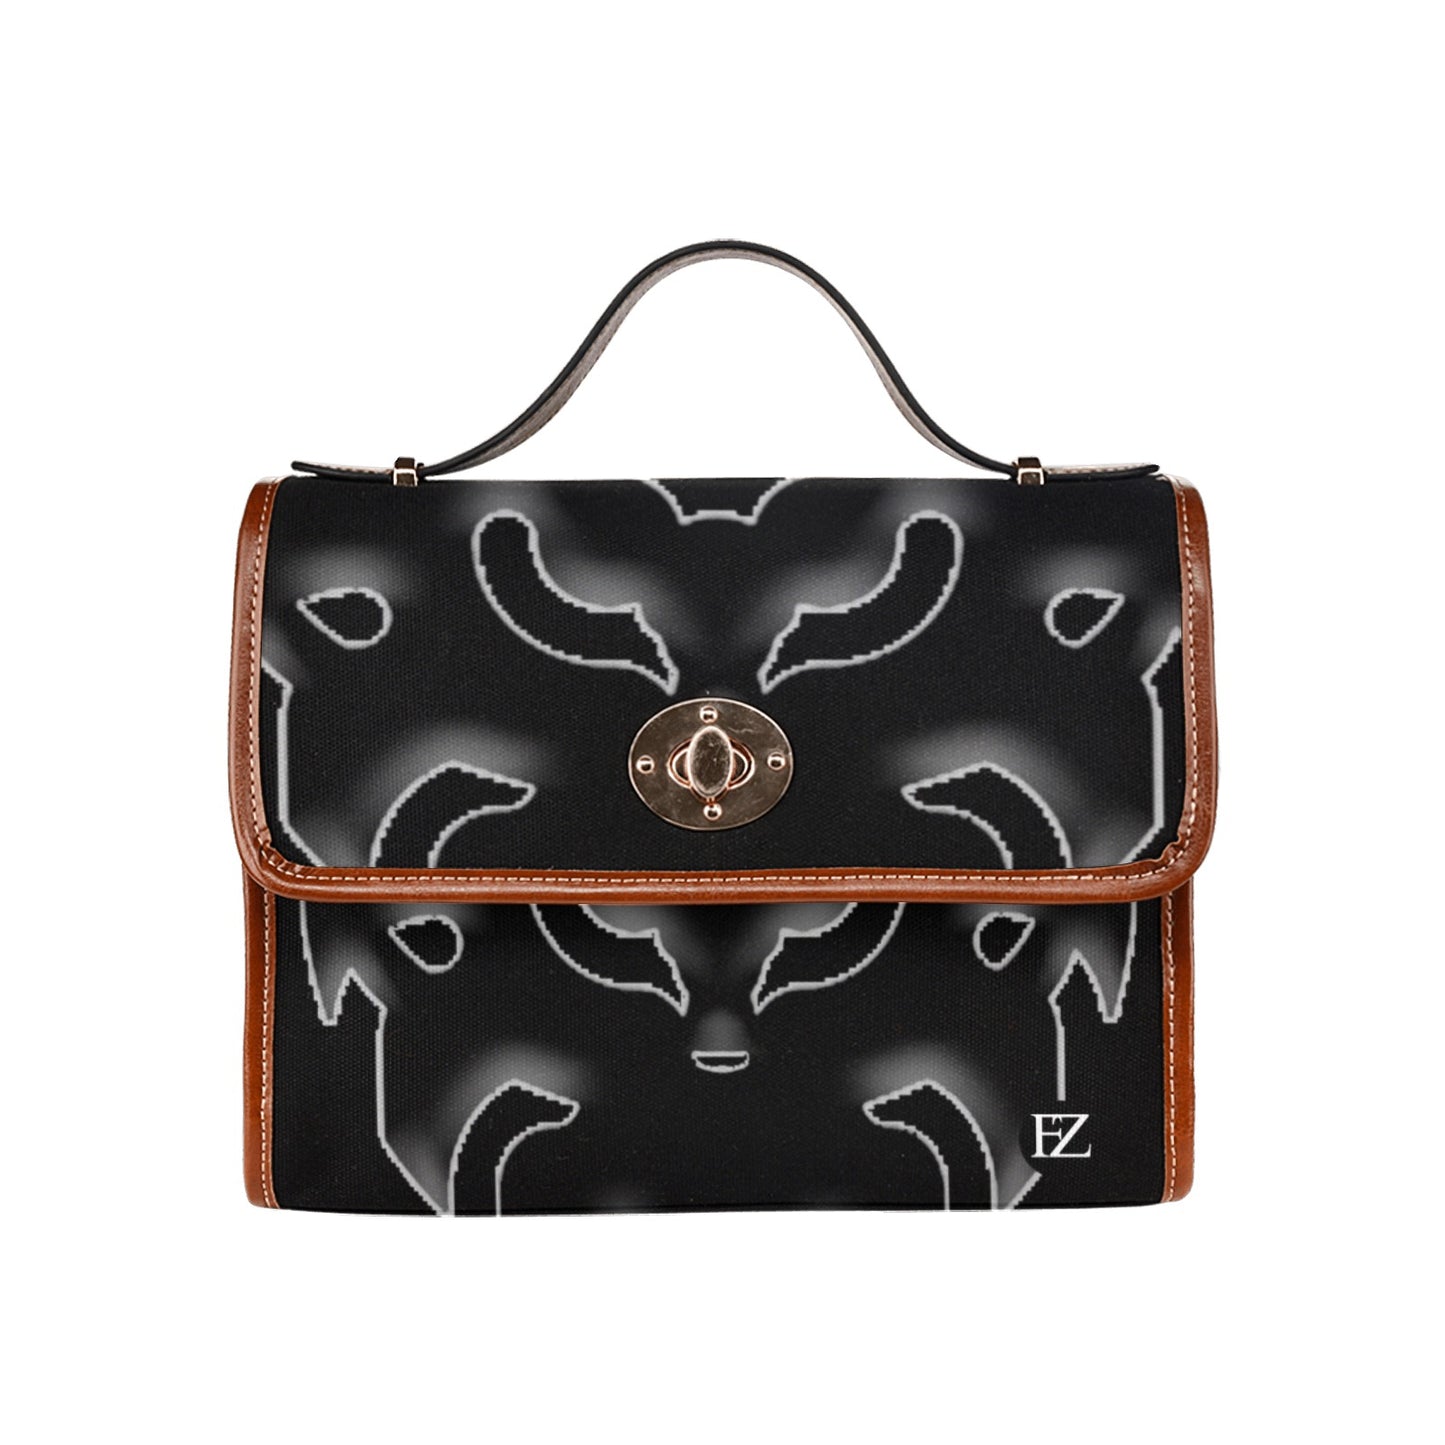 fz future handbag one size / fz future handbag - black all over print waterproof canvas bag(model1641)(brown strap)